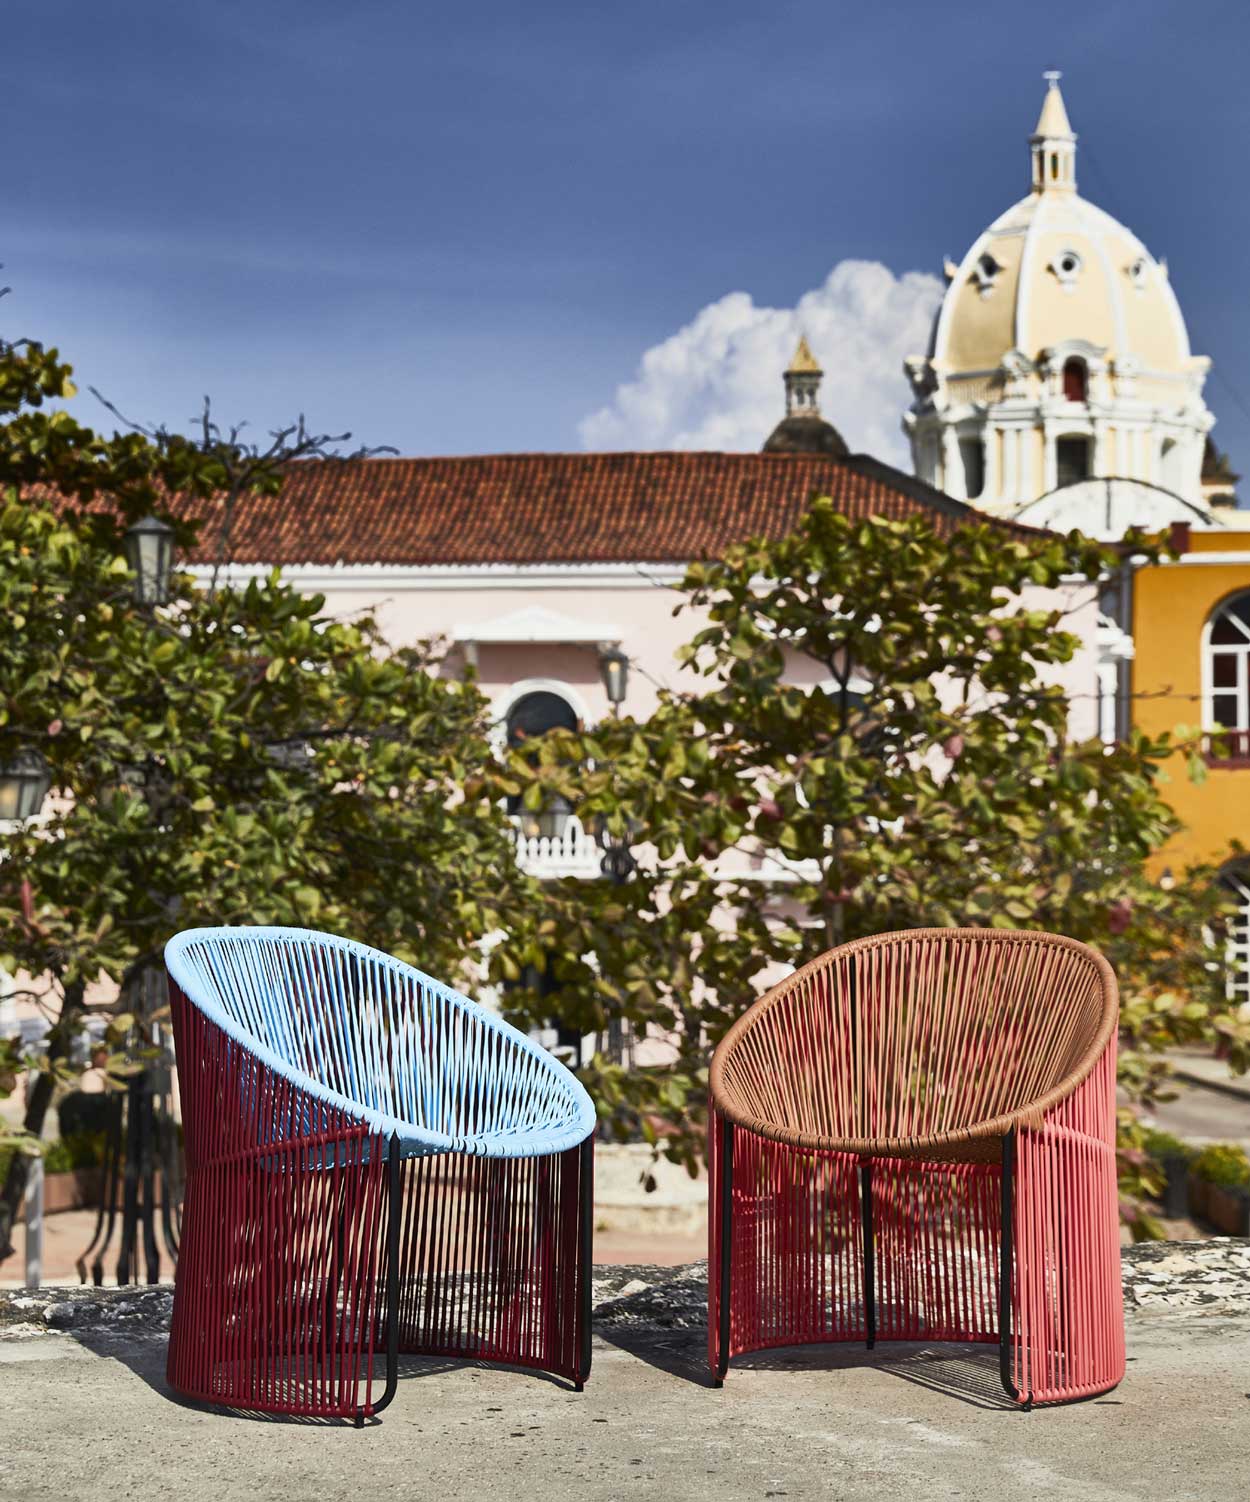 Cartagenas - Lounge Chair